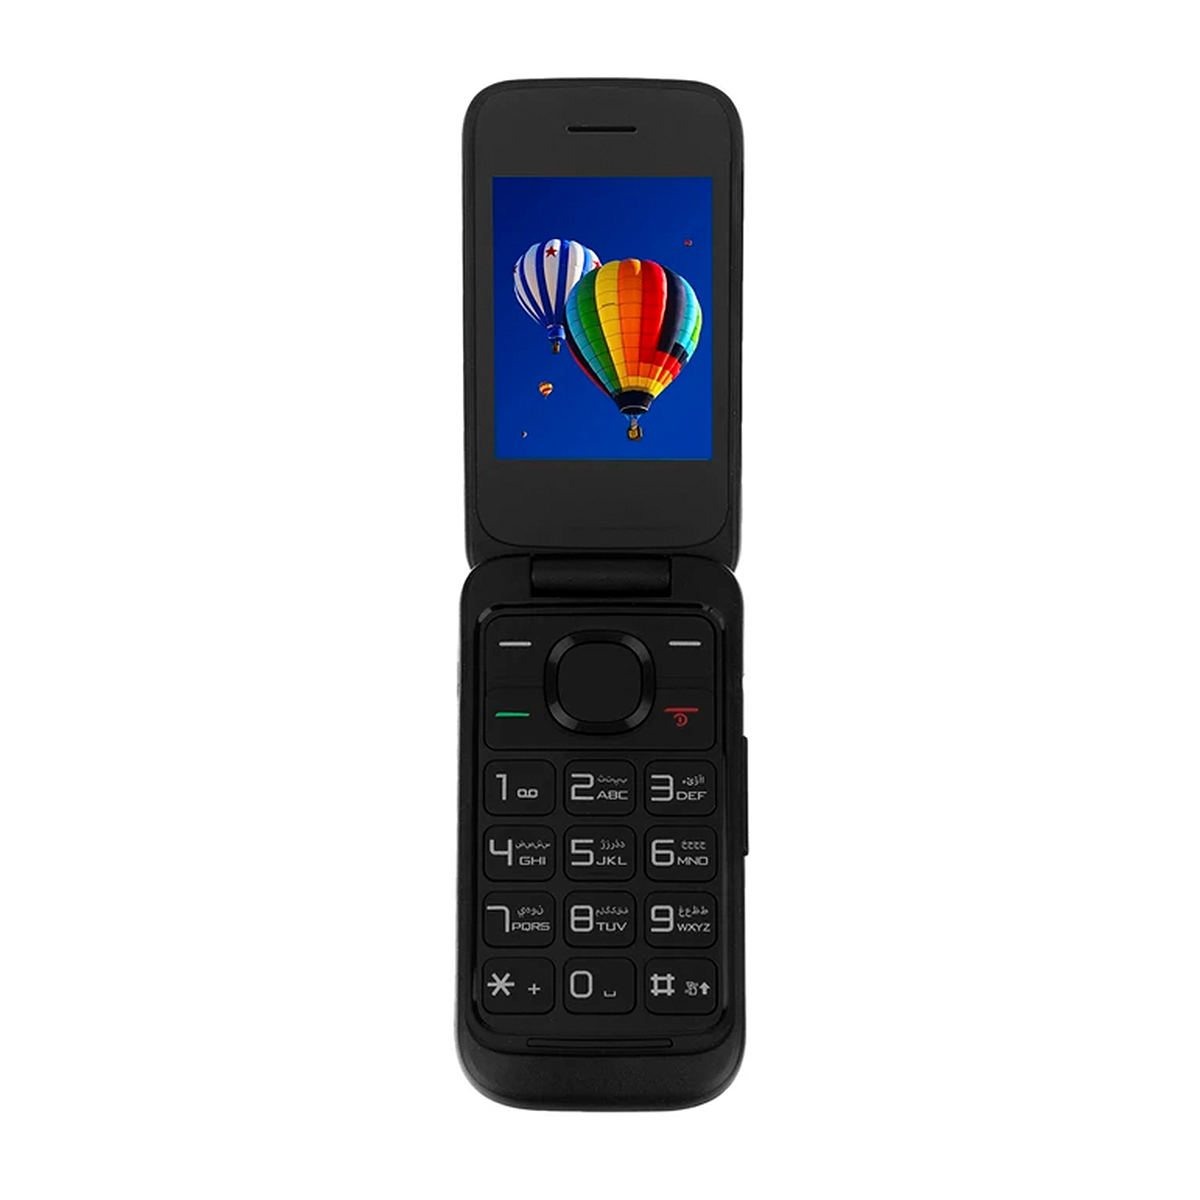  گوشی موبایل تاشو آلکاتل مدل 2053D